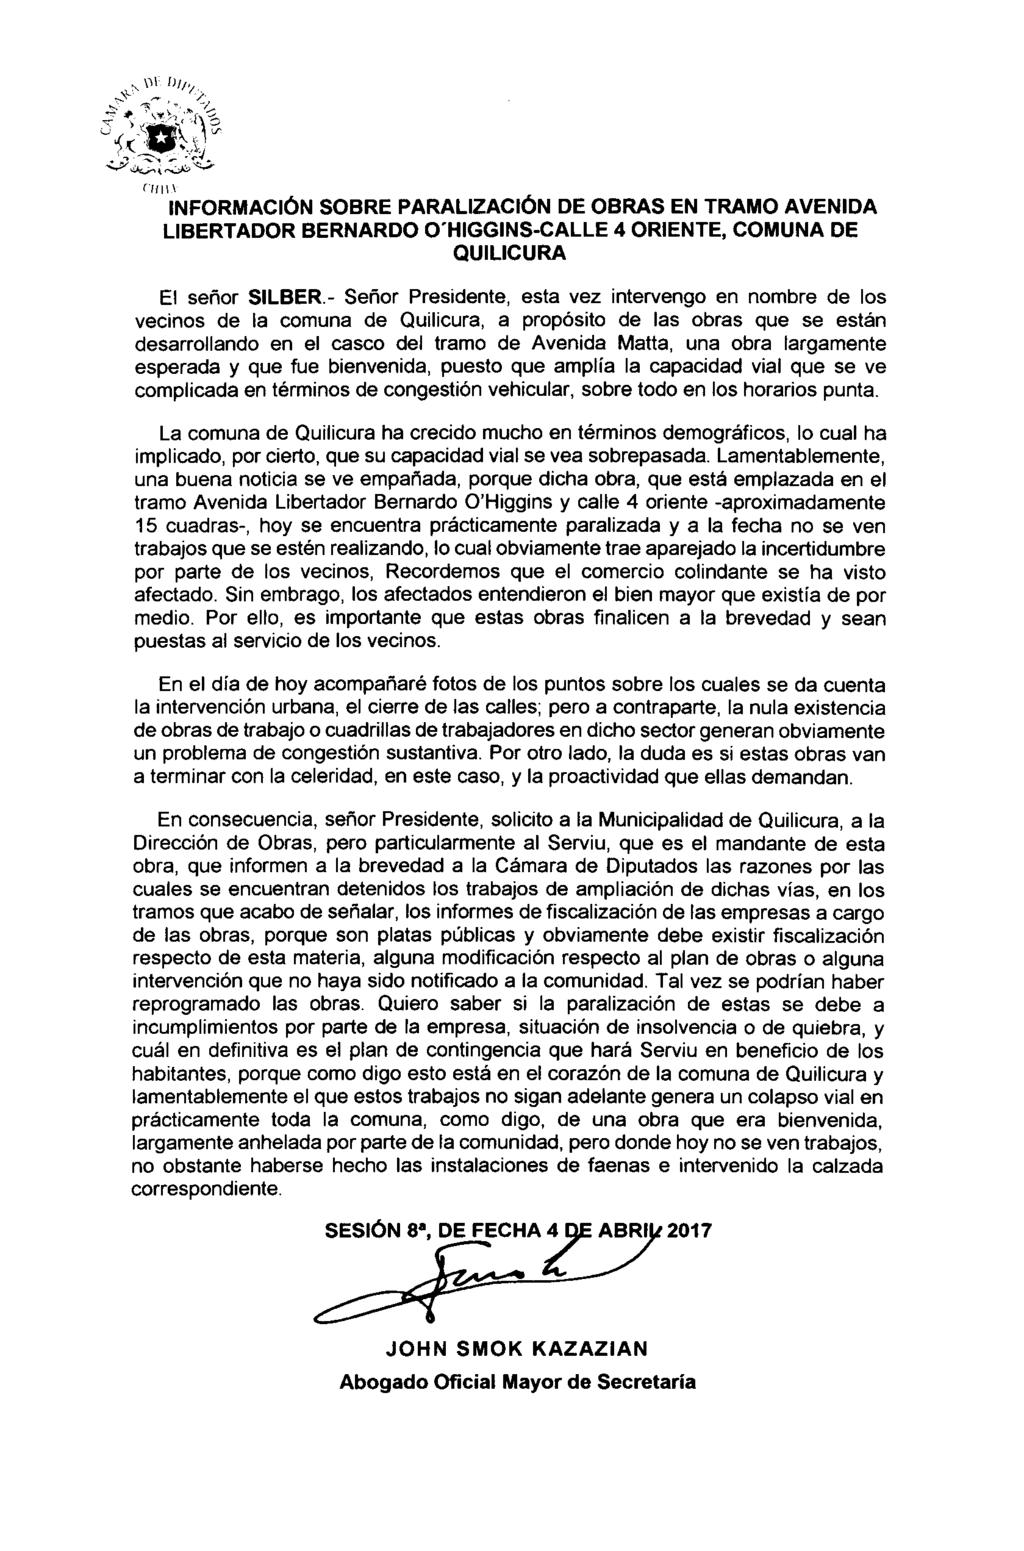 INFORMACIÓN SOBRE PARALIZACIÓN DE OBRAS EN TRAMO AVENIDA LIBERTADOR BERNARDO O'HIGGINS-CALLE 4 ORIENTE, COMUNA DE QUILICURA El señor SILBER.